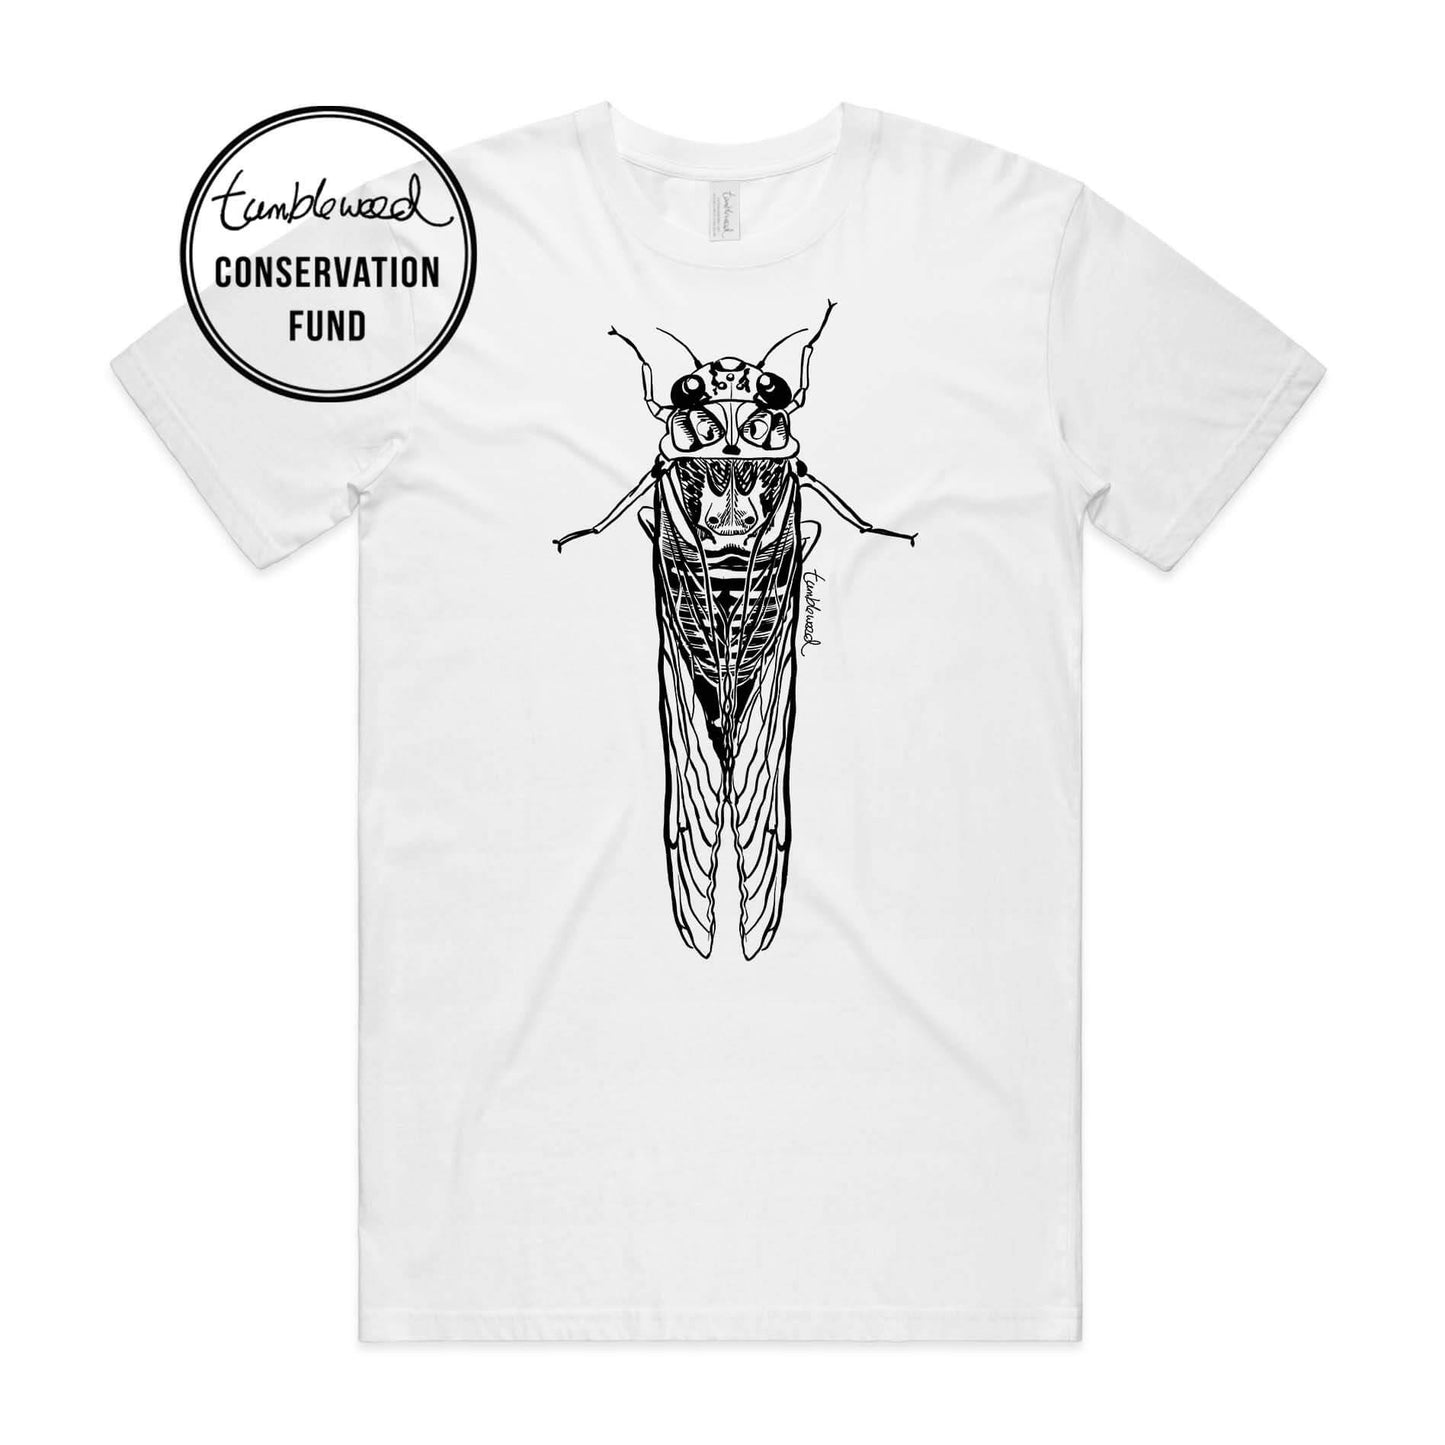 Grey marle, female t-shirt featuring a screen printed Cicada/kihikihi-wawā design.